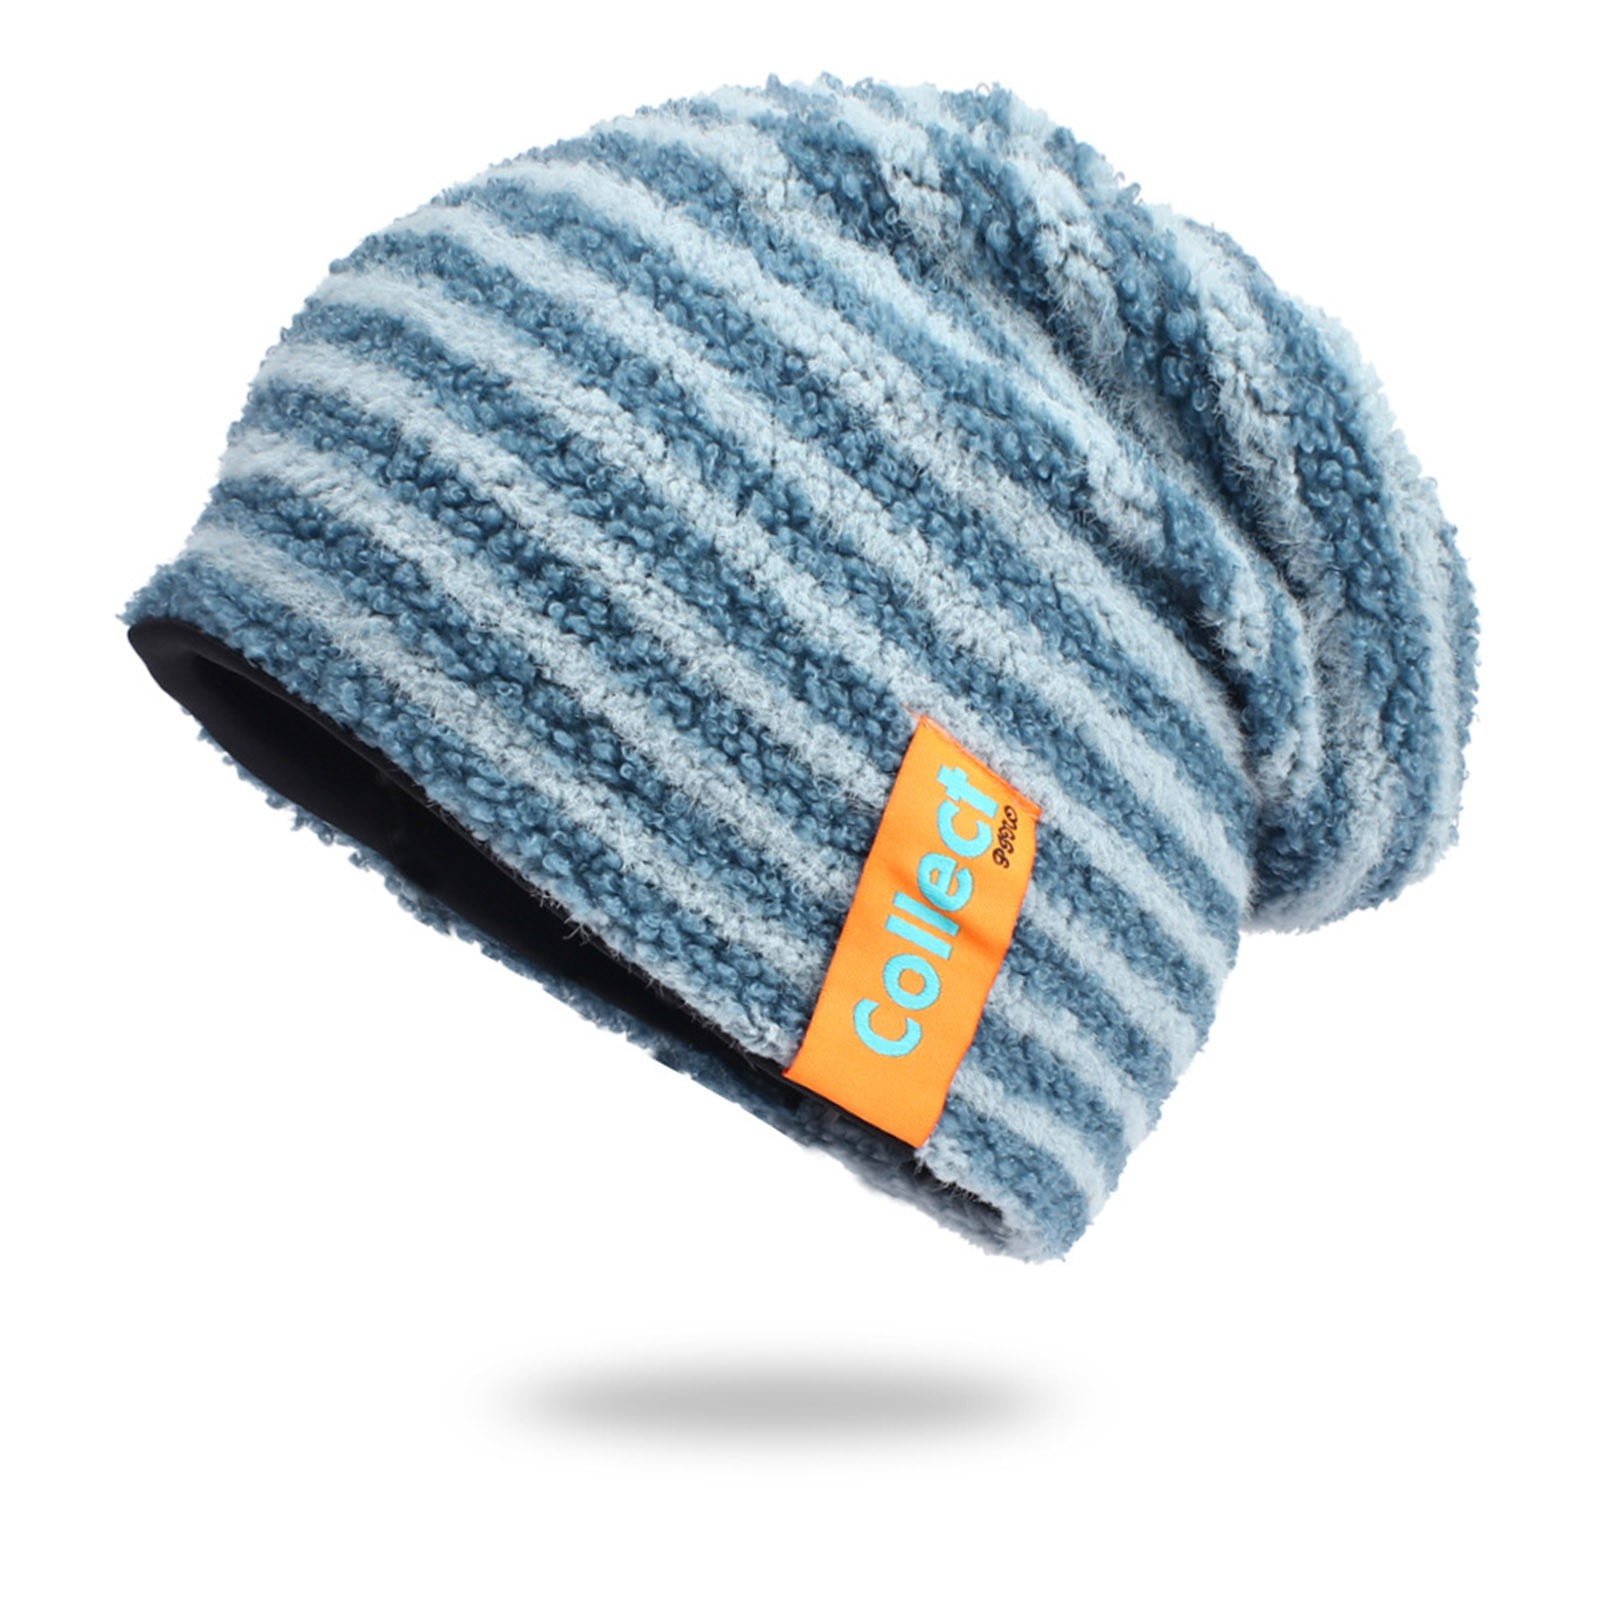 Spikerking Men's Soft Lined Thick Knit Skull Cap Warm Winter Slouchy Beanies Hat